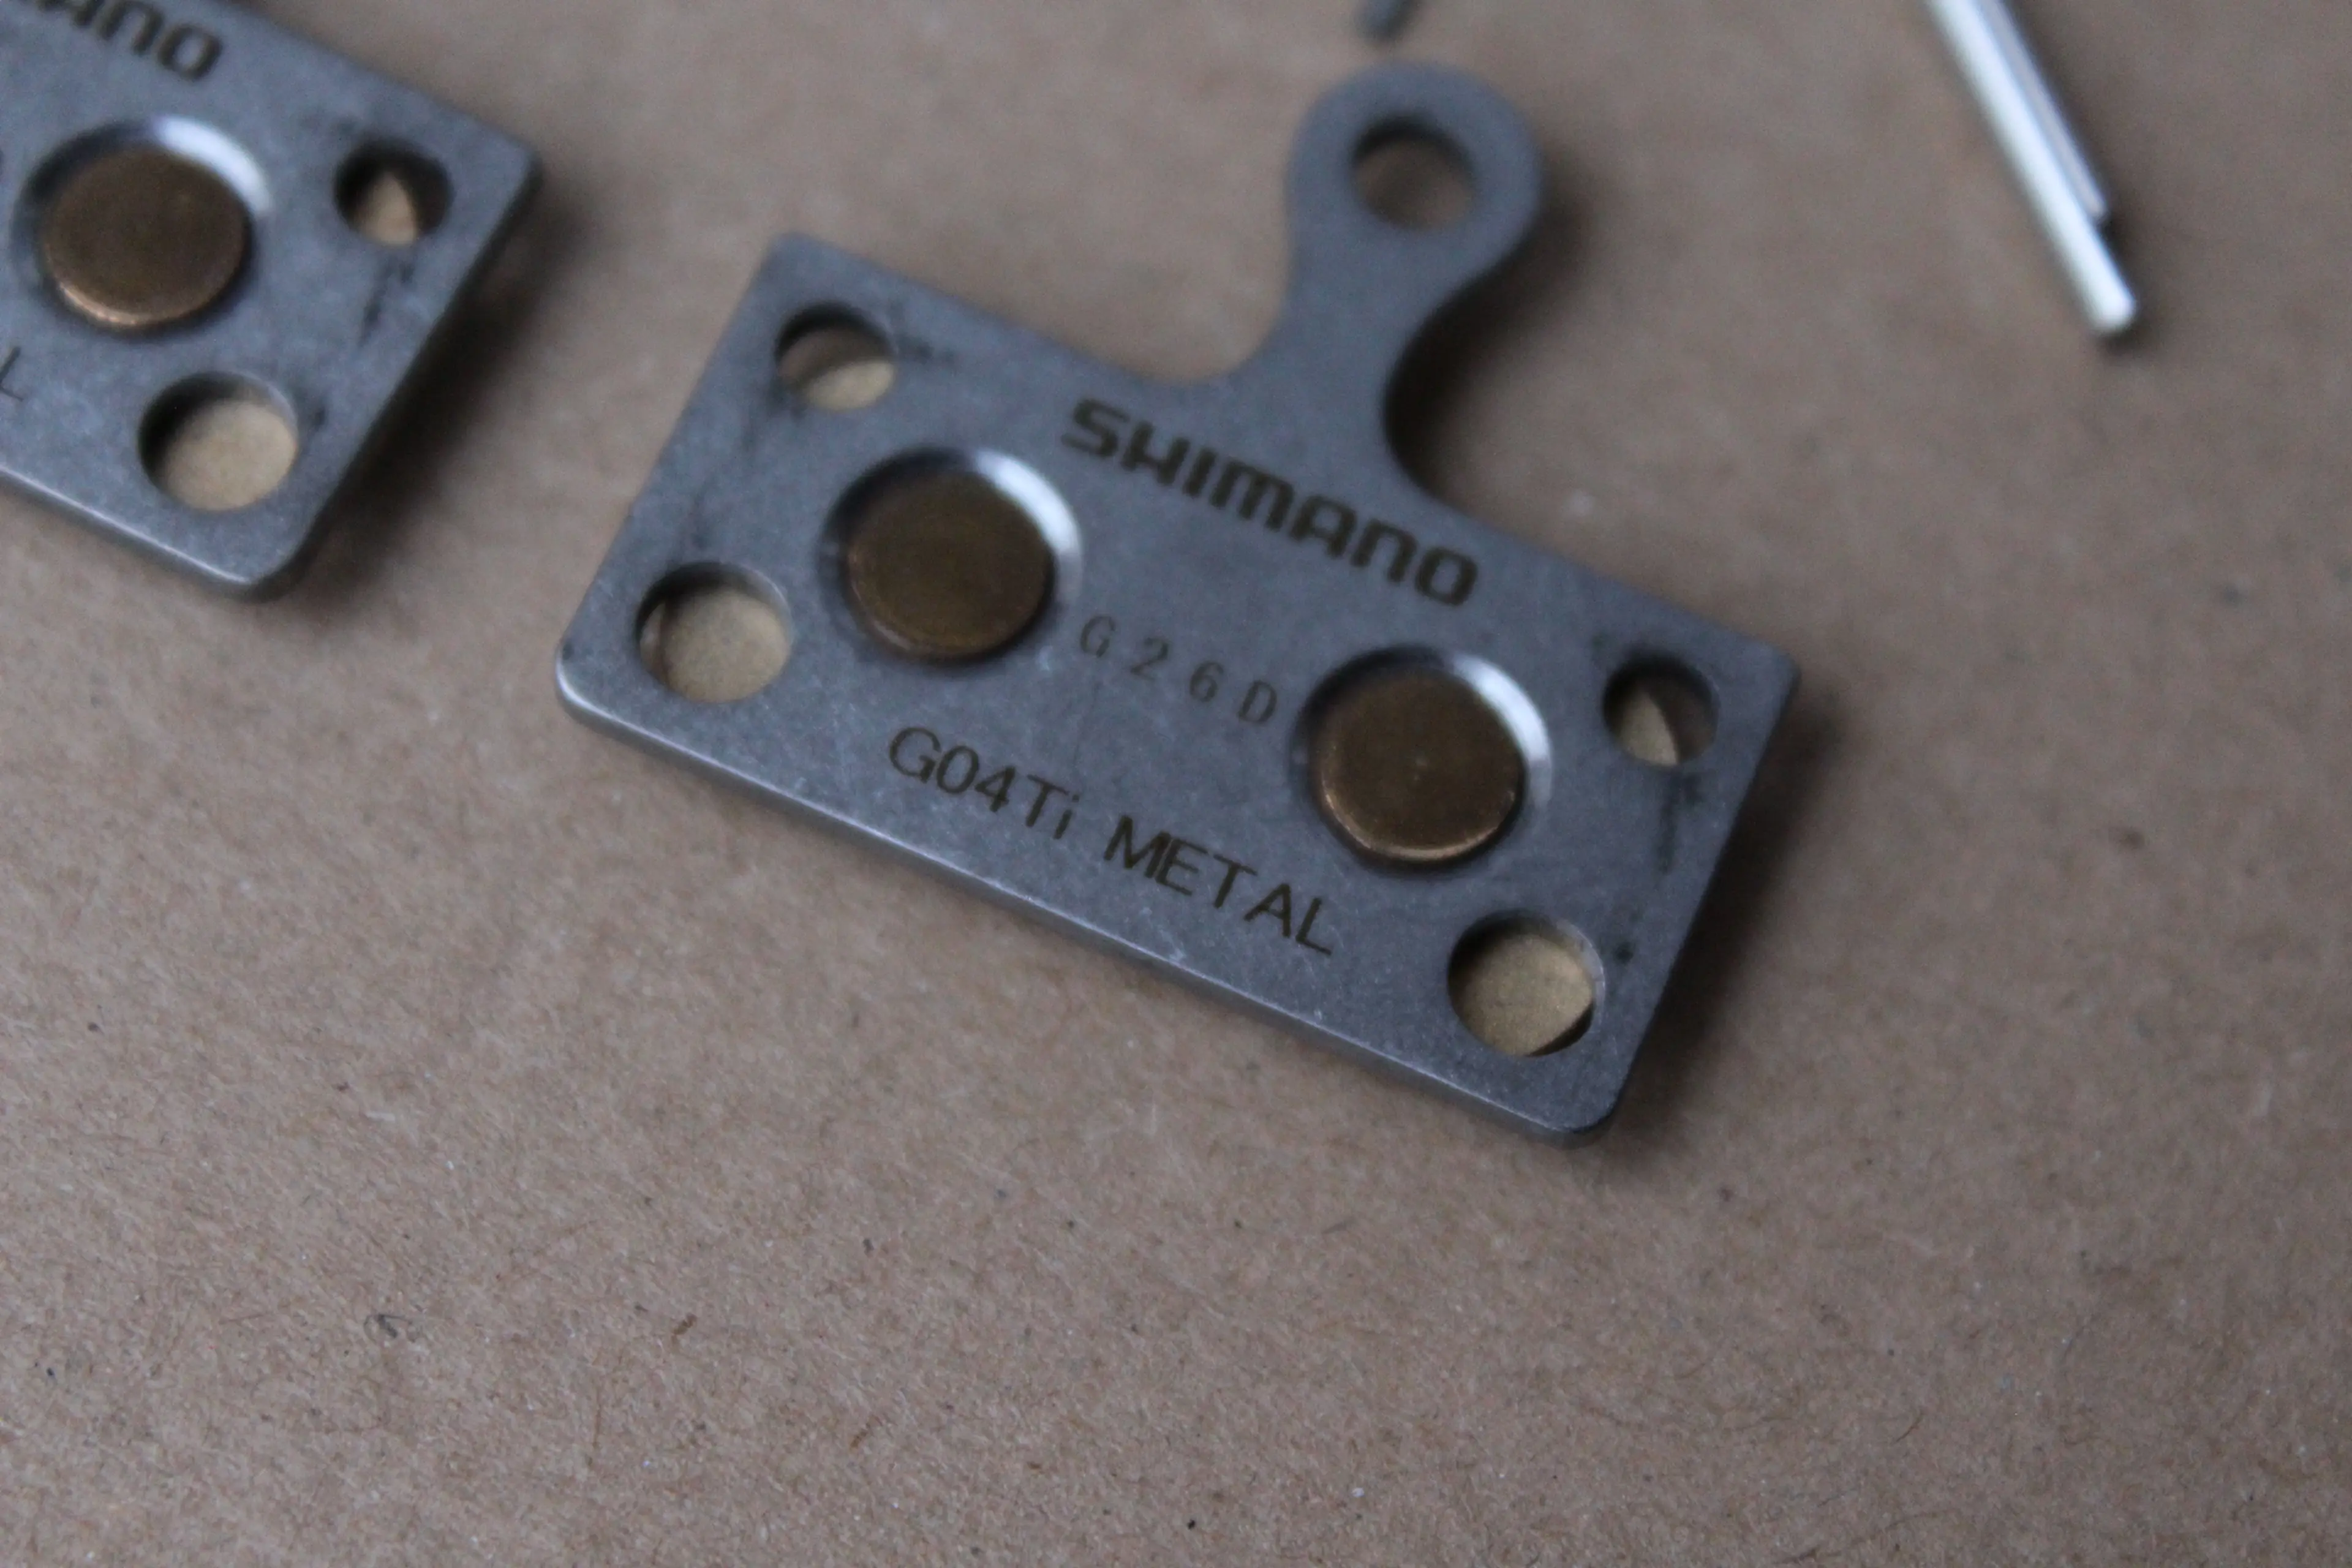 3. Shimano G04TI Metal-Titanium